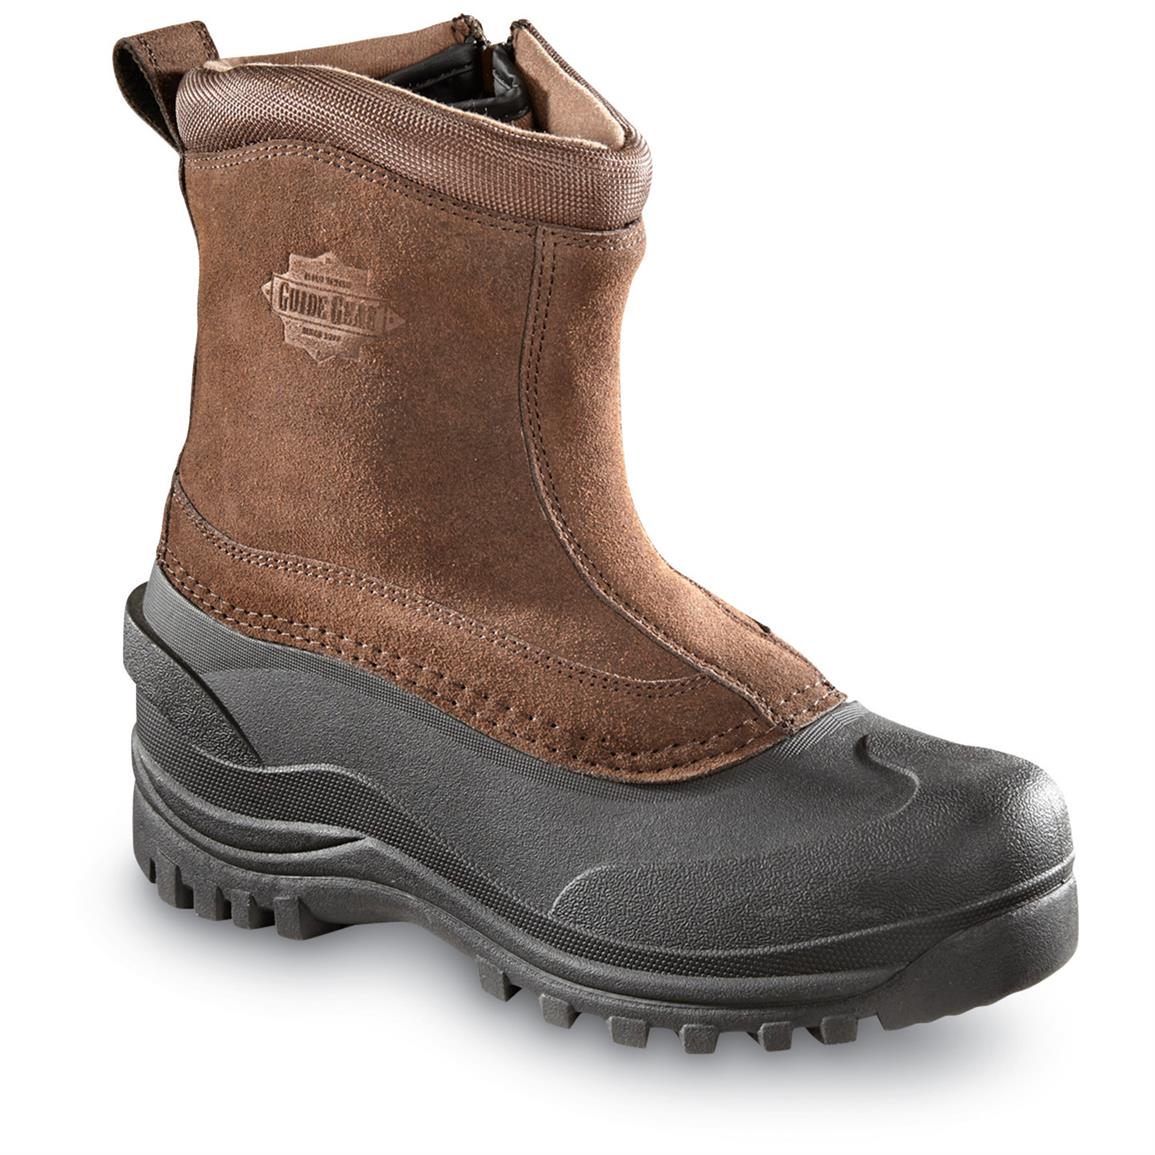 Guide Gear Men's Insulated SideZip Winter Boots, 400 Grams 609790